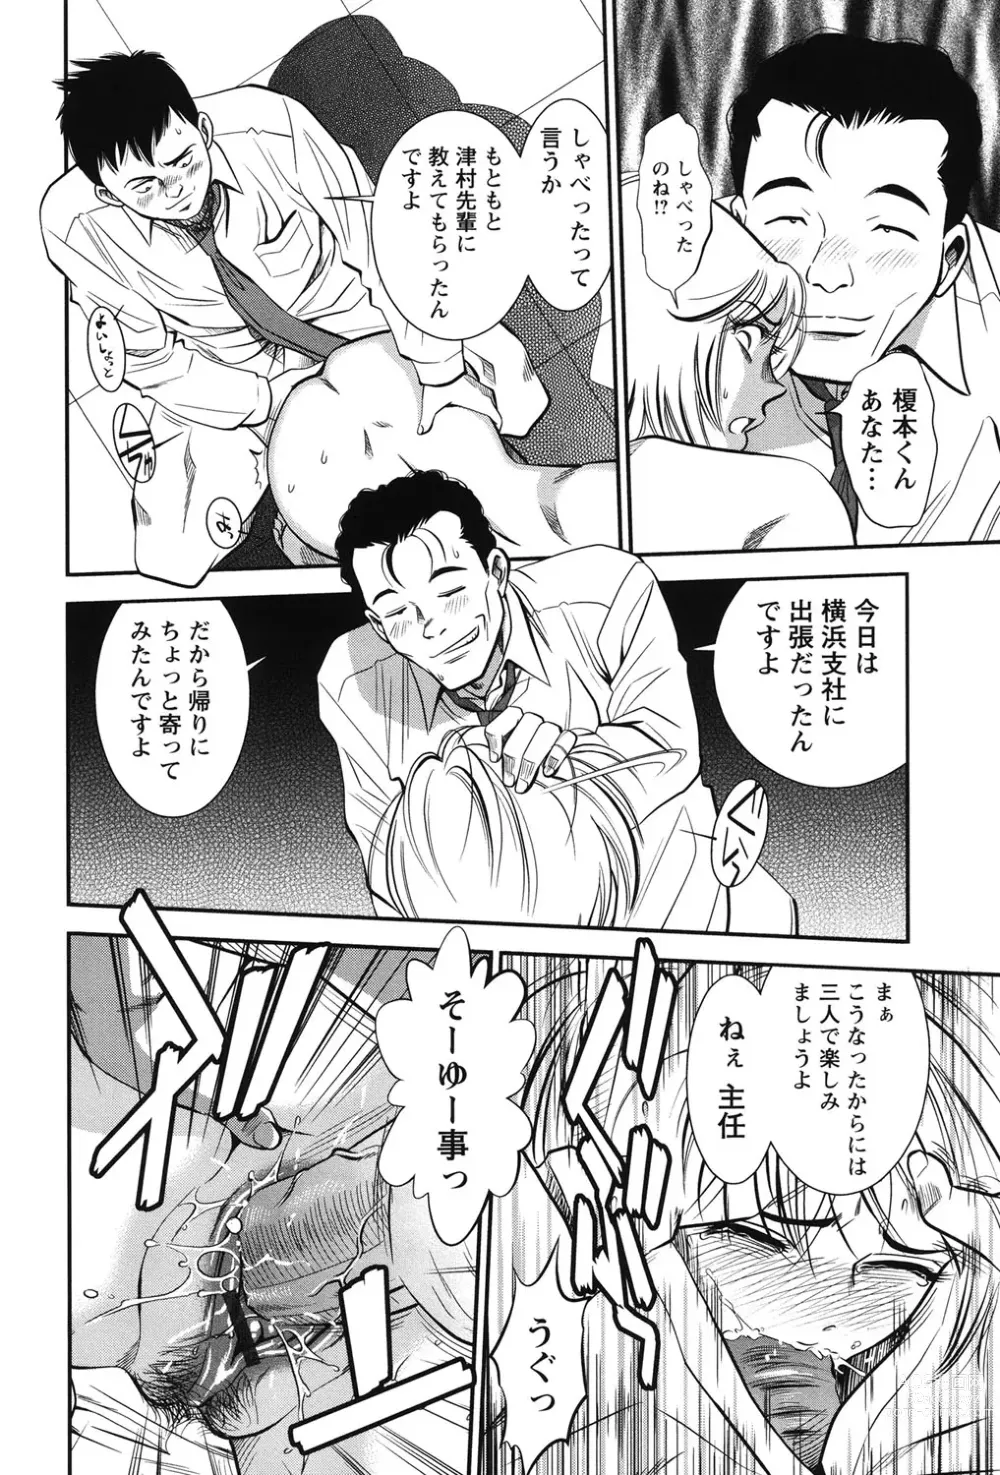 Page 199 of manga Melty Moon Ugly Man Rape